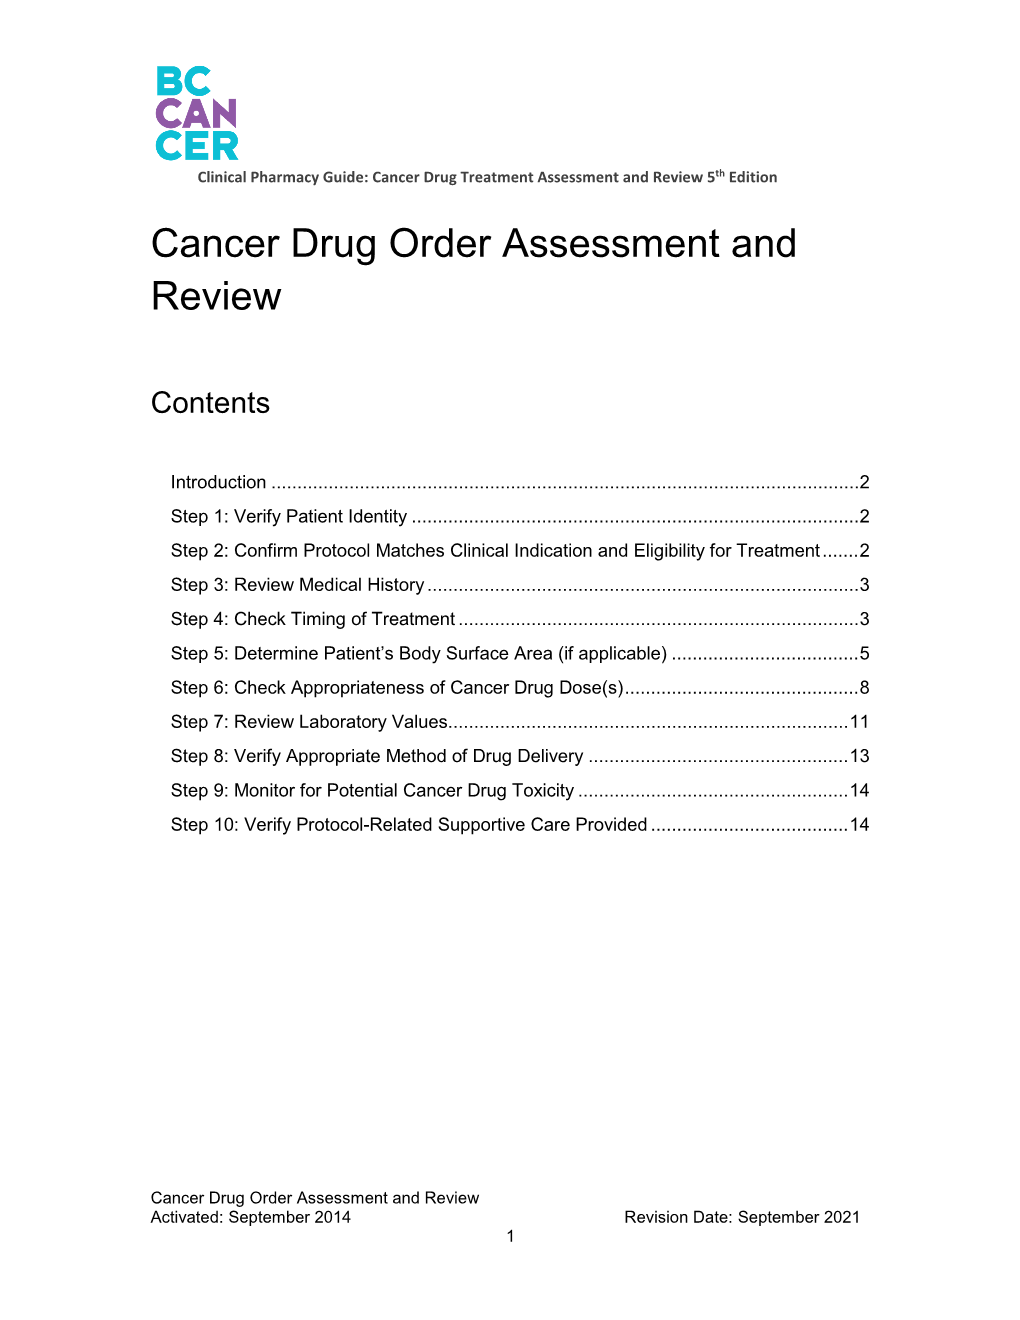 Cancer Drug Order Assessment and Review